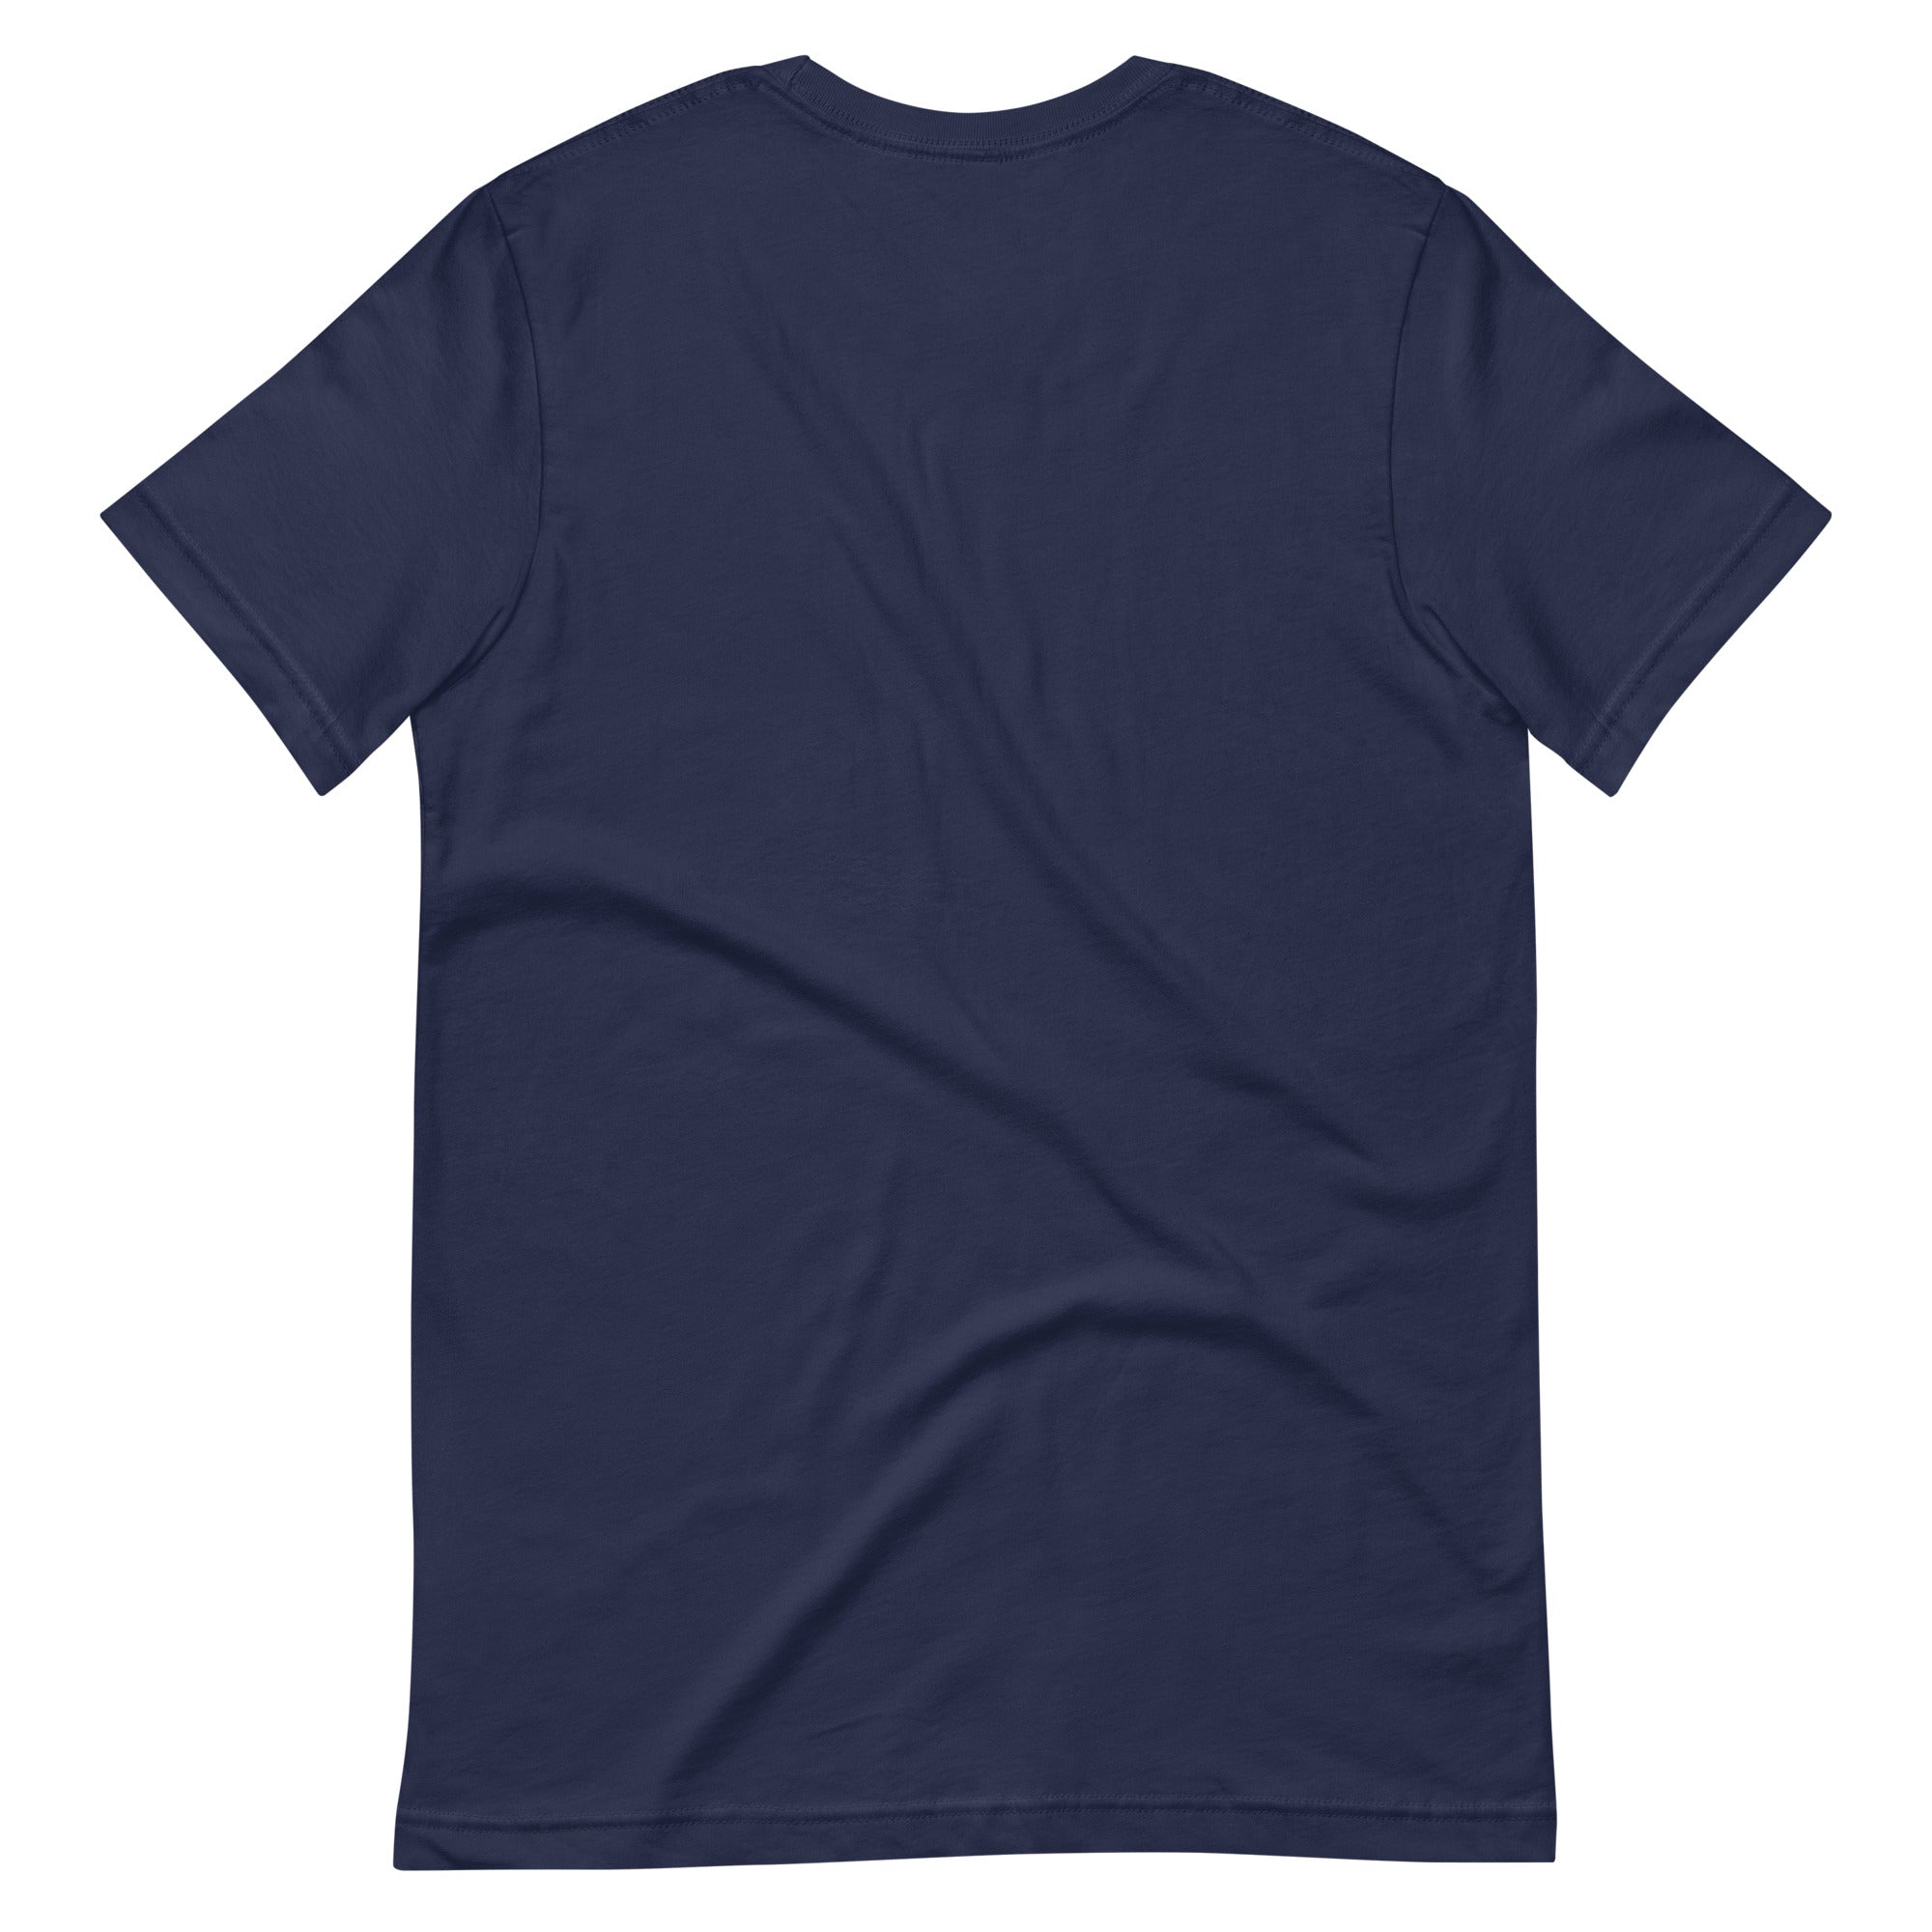 Arches T-Shirt (Navy) - Phinney Ridge | Seattle, WA